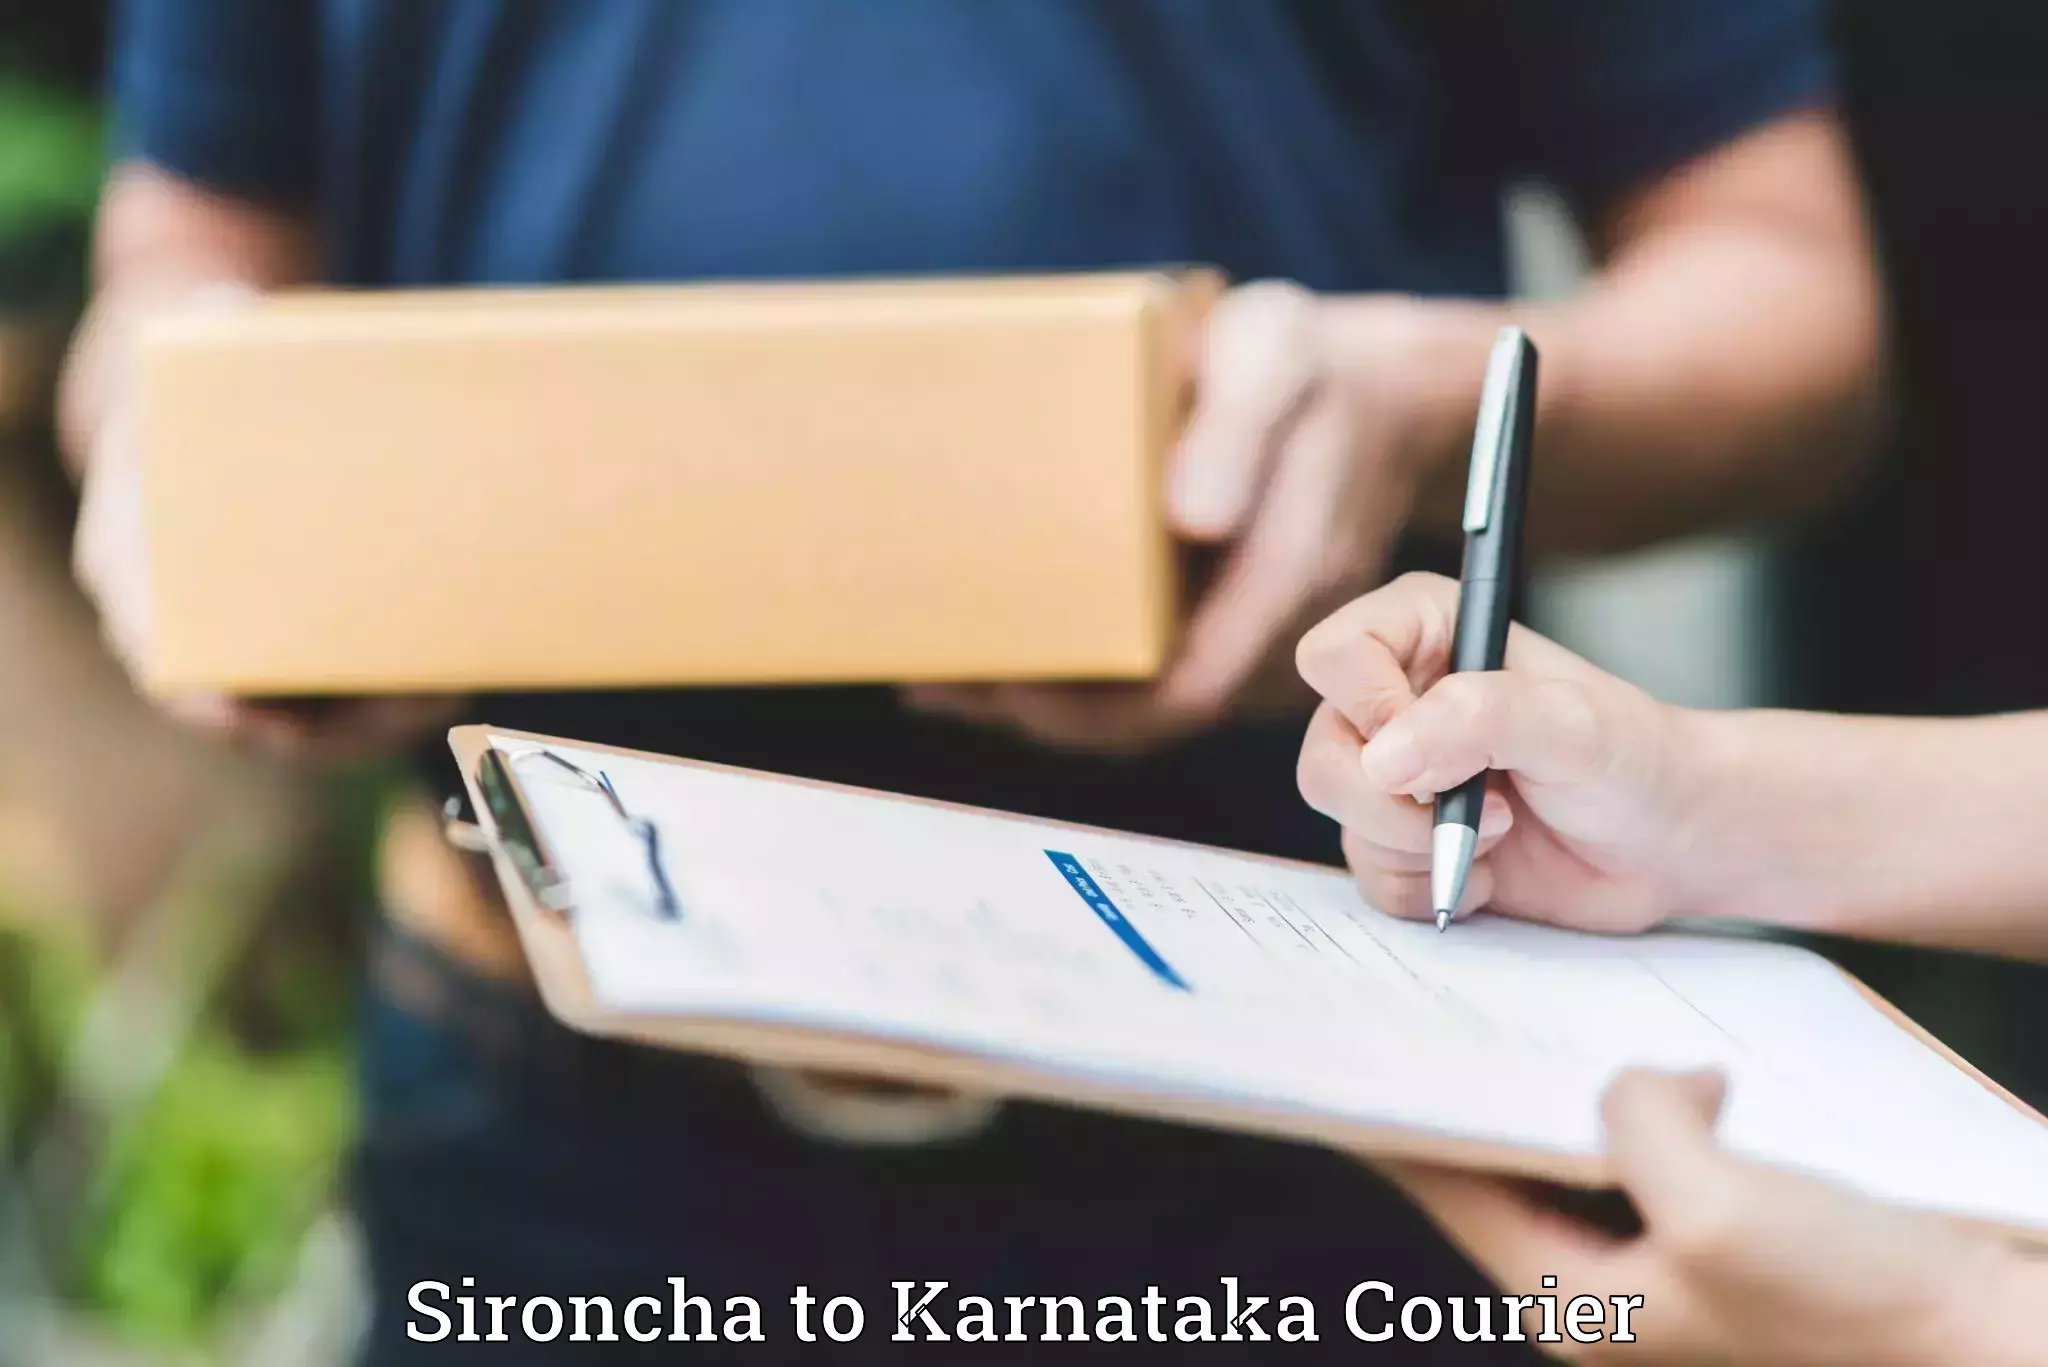 Baggage transport network Sironcha to Karnataka